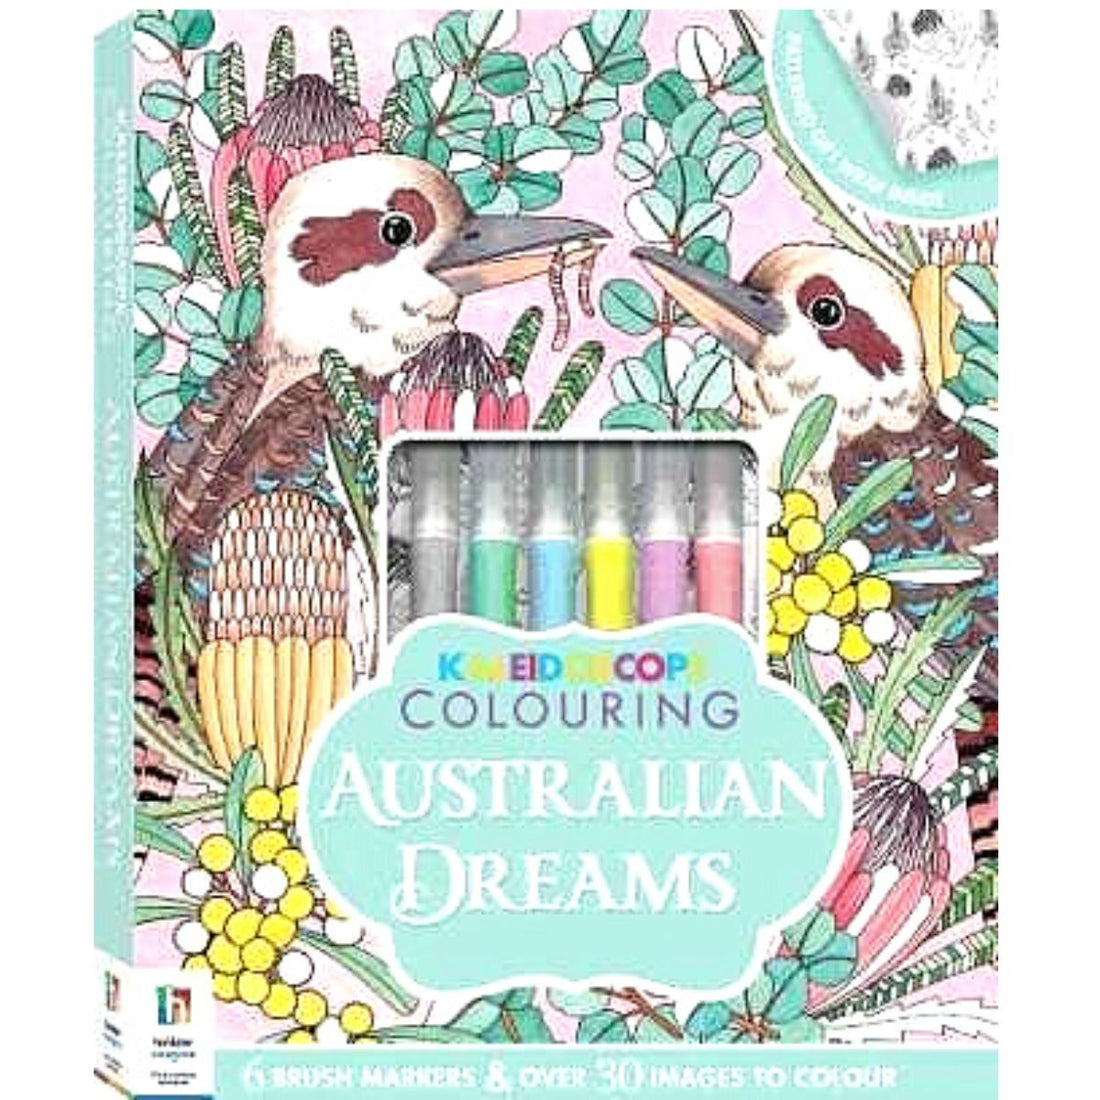 Kaleidoscope Colouring Kit: Australian Dreams